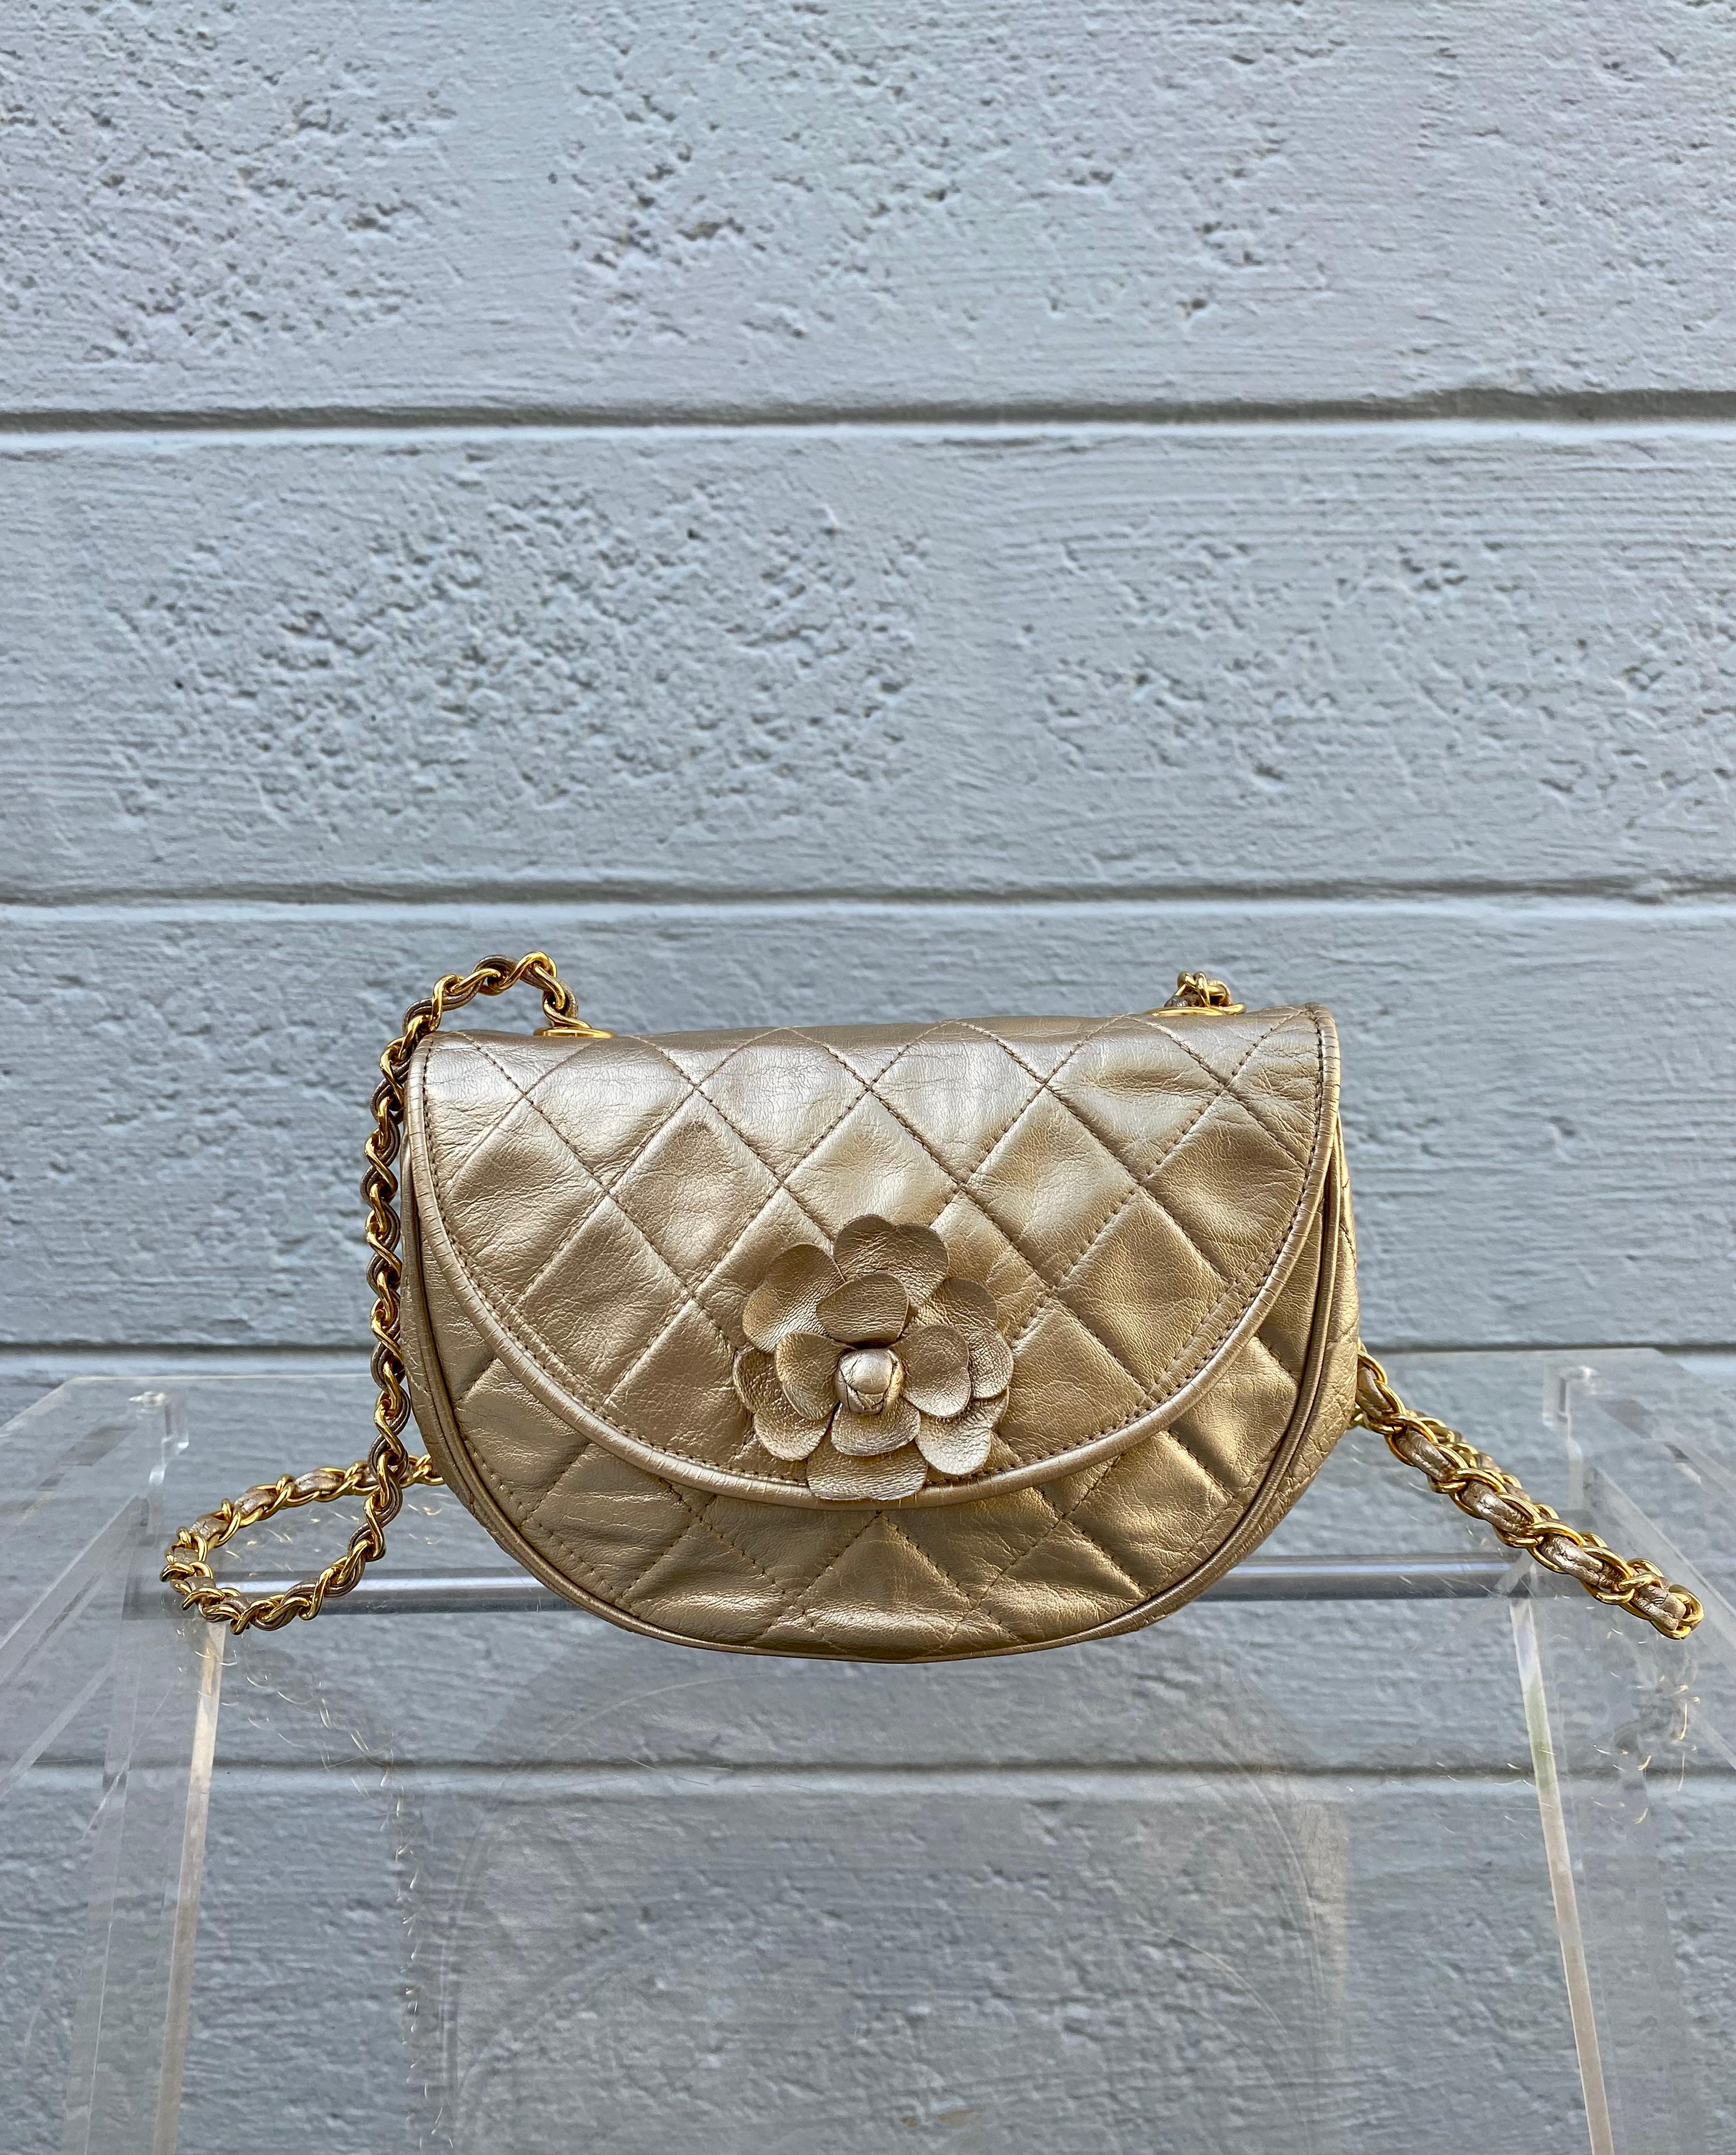 Chanel Camelia Flap Bag - 6 For Sale on 1stDibs